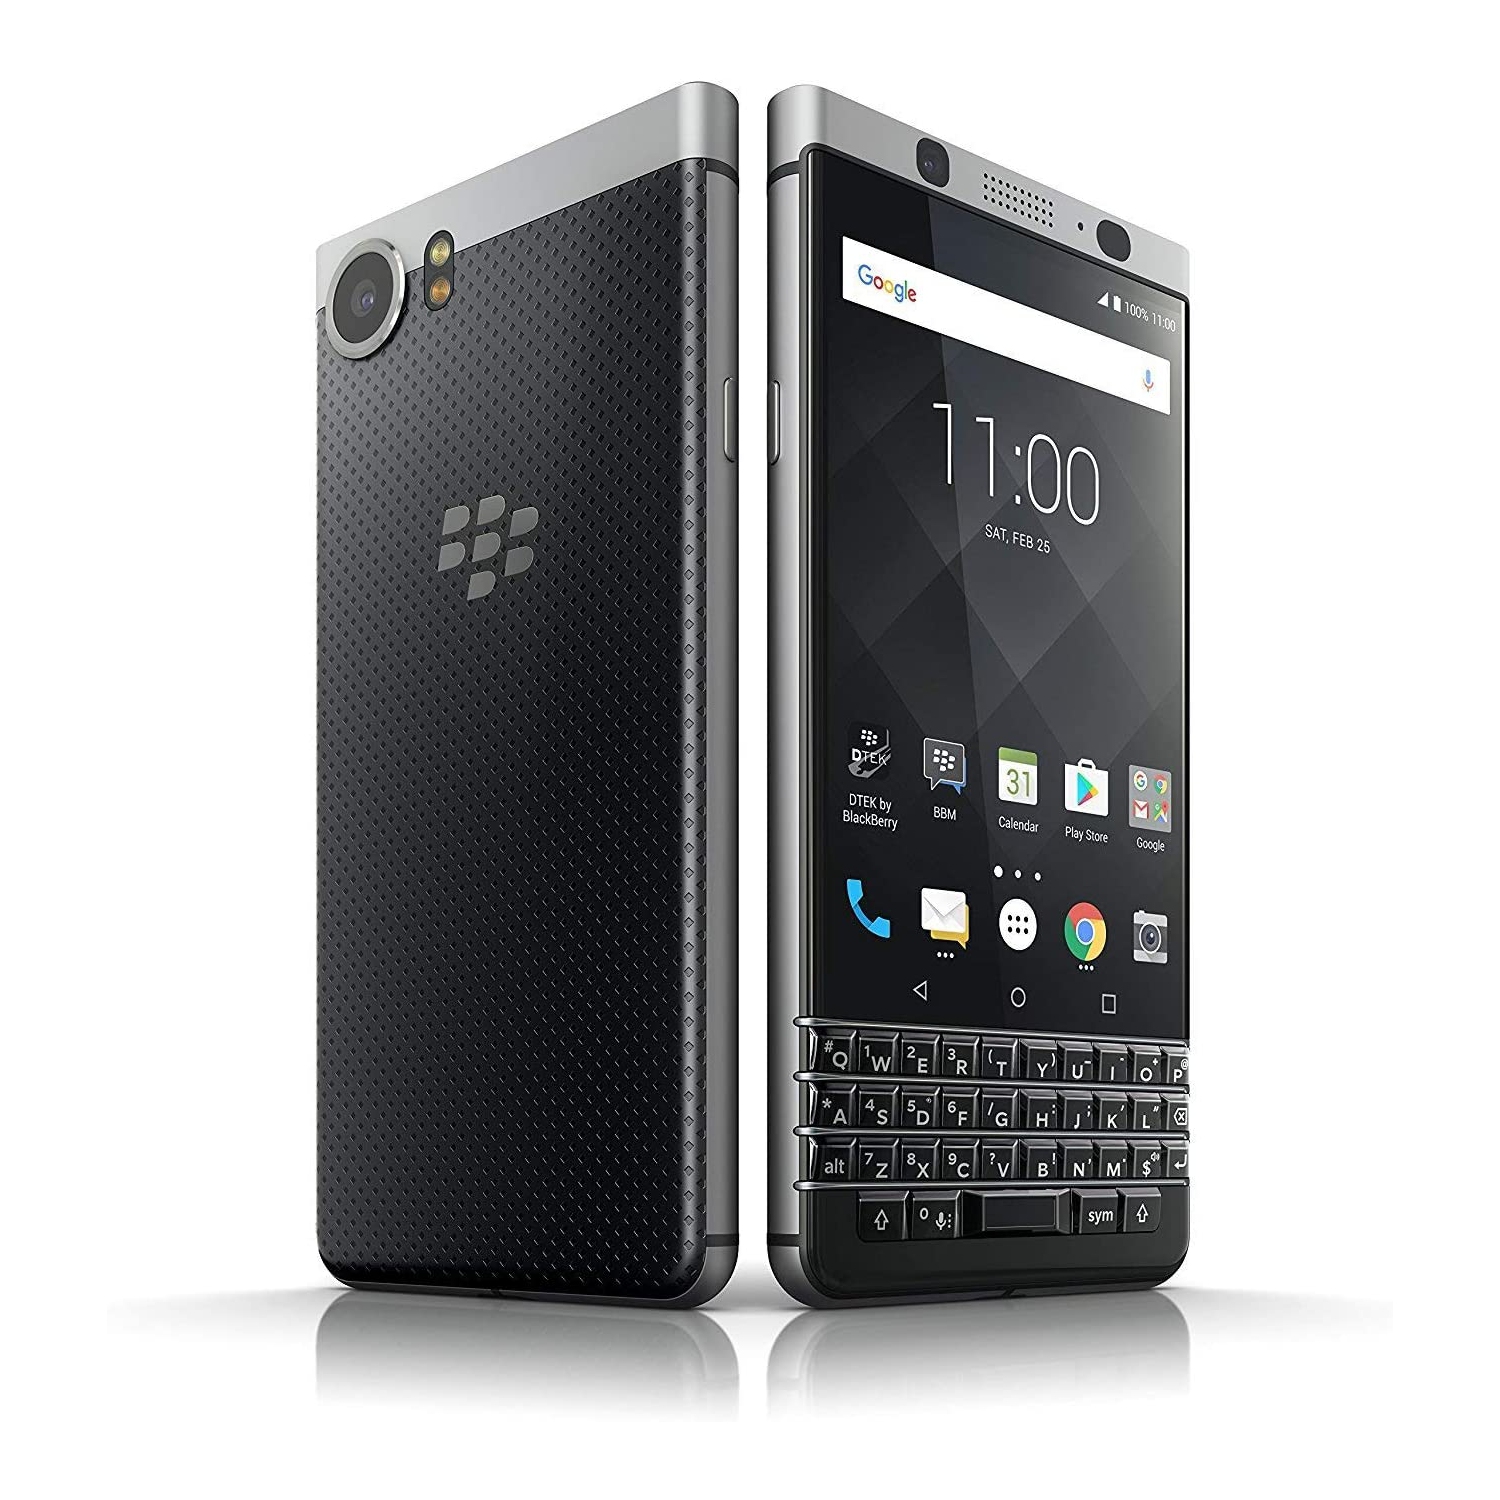 BlackBerry KEYone (Silver) Unlocked Android Smartphone 4G LTE, 32GB (Canadian Warranty)